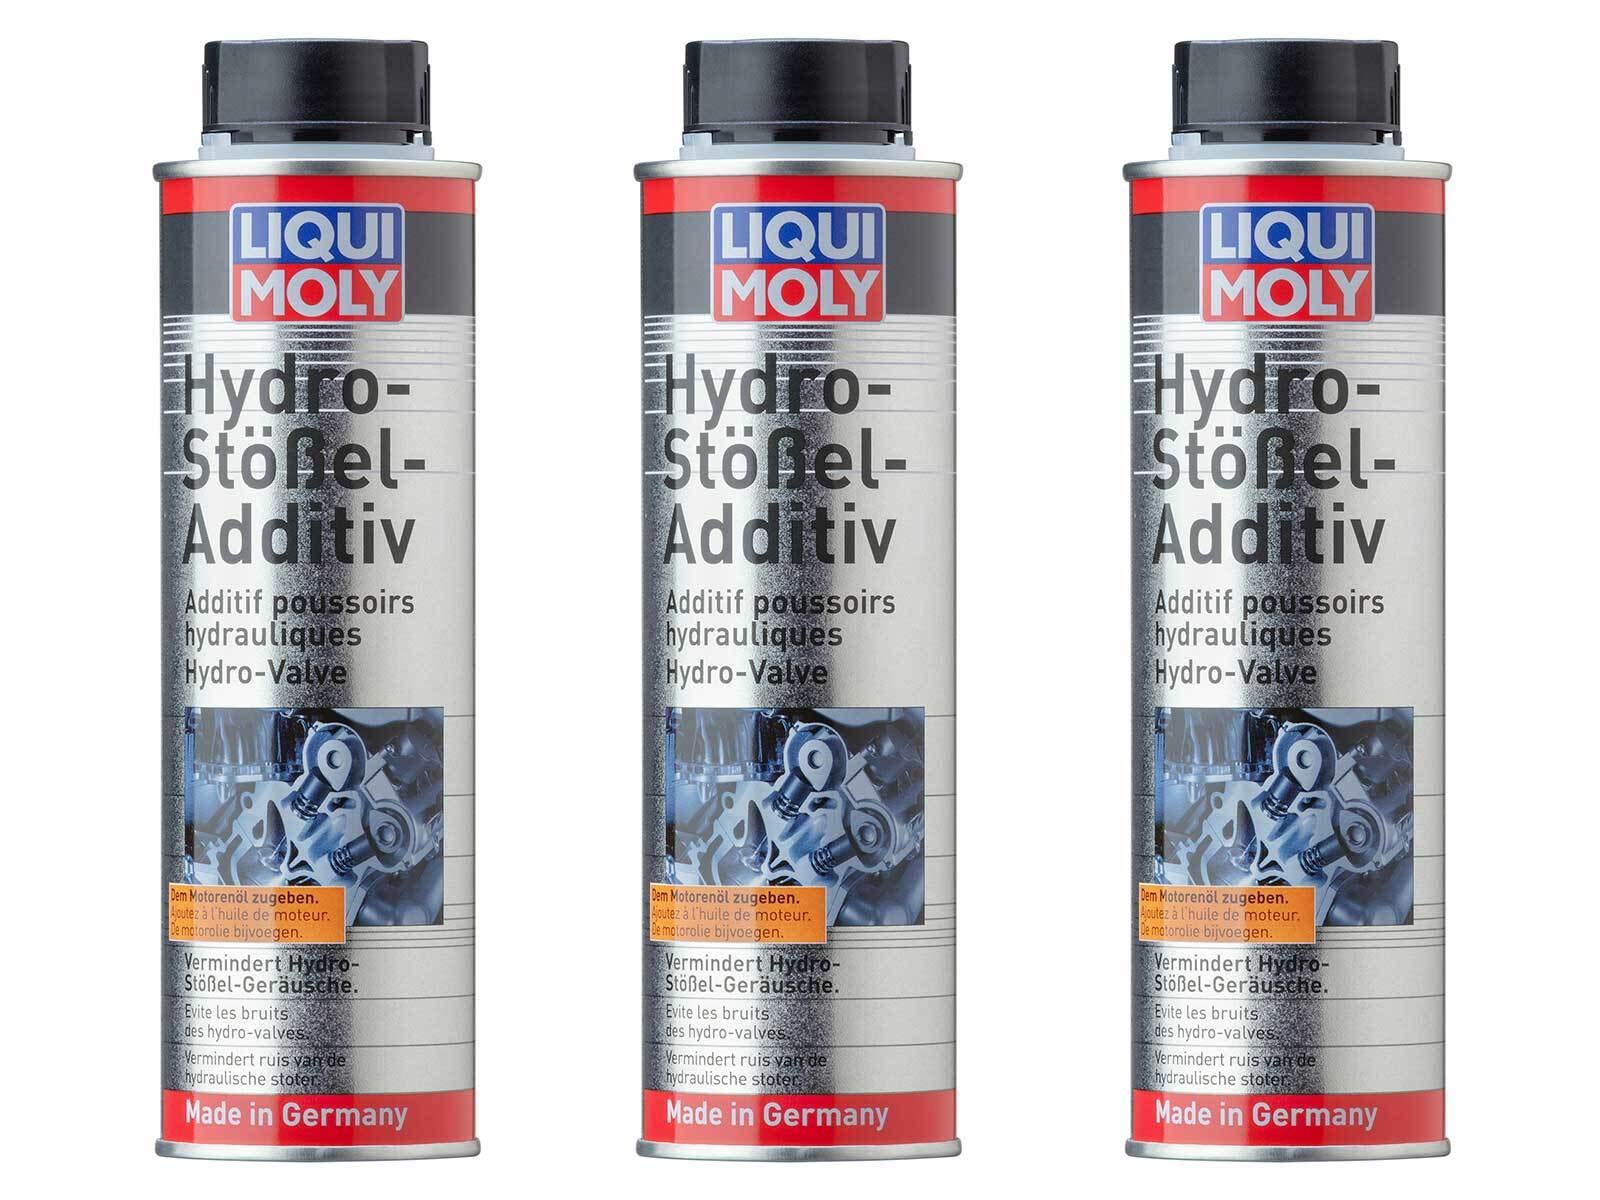 ILODA 3X Original Liqui Moly 300ml Hydrostößel Additiv Additive Hydro Valve 1009 von ILODA